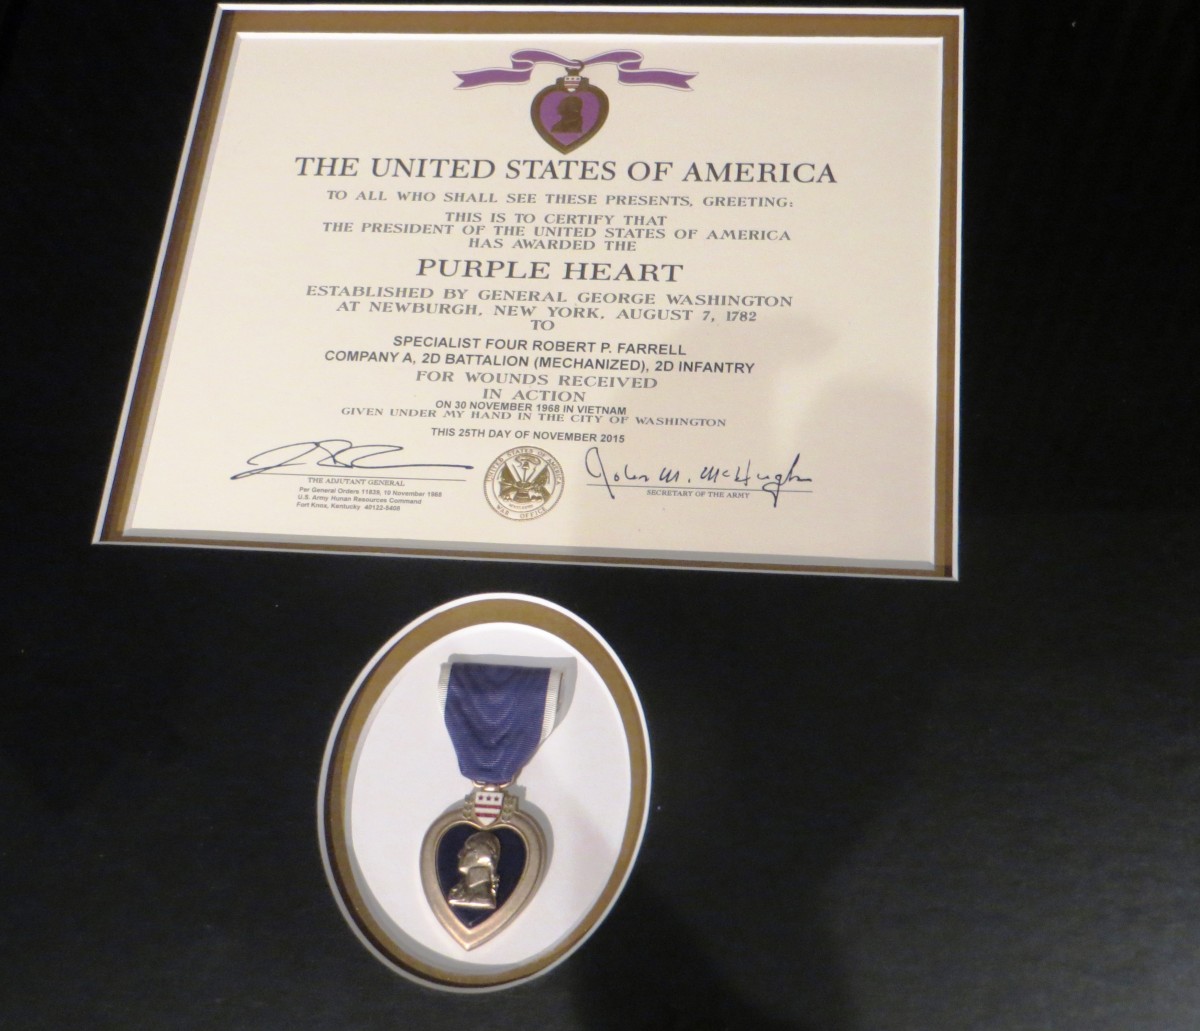 Vietnam veteran receives Purple Heart Medal after 47 years Article